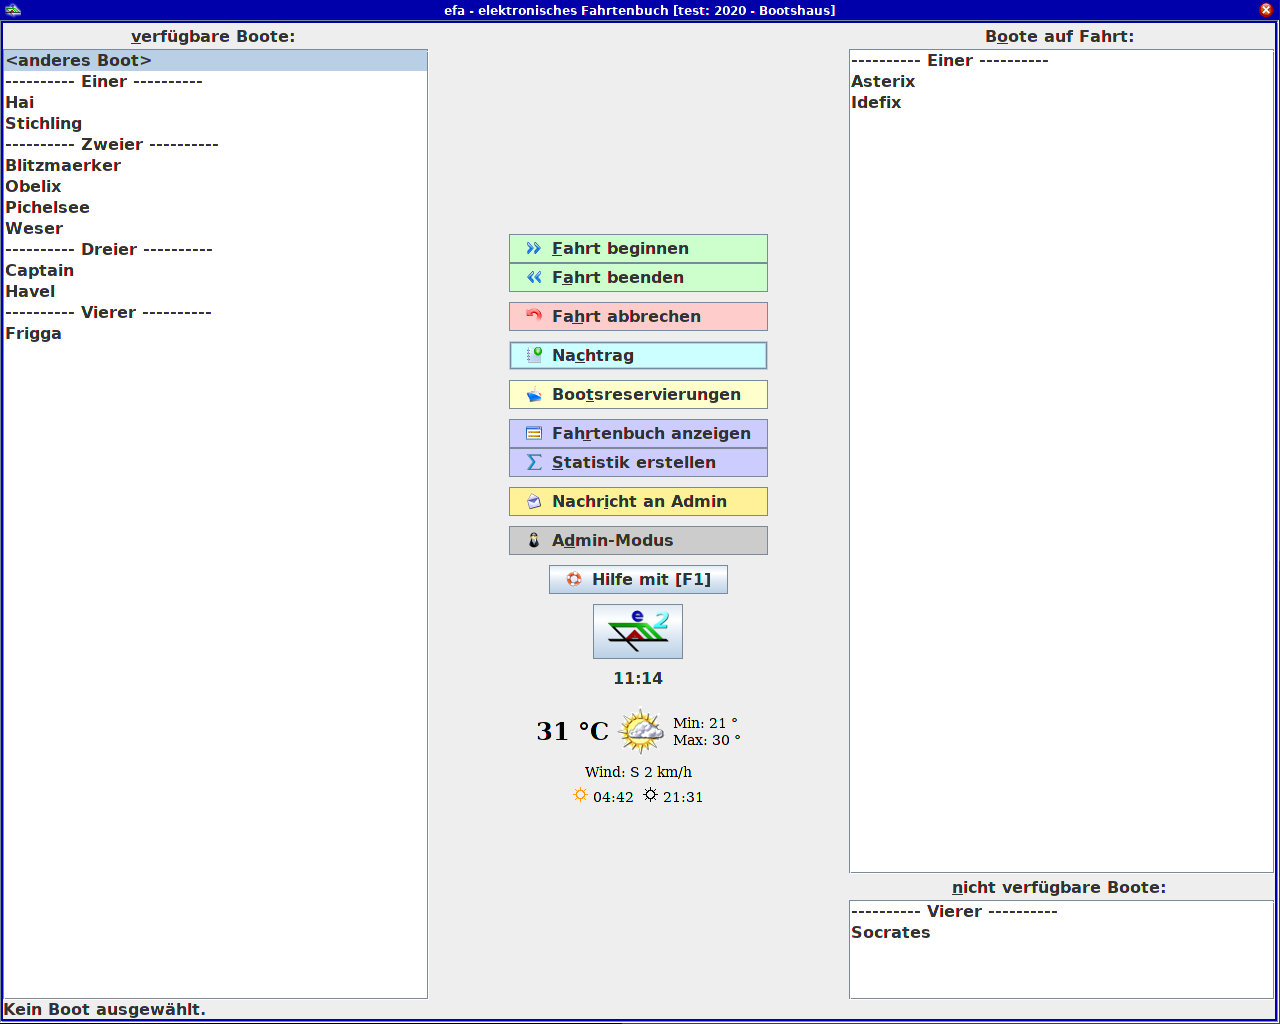 a screenshot of the main window for the electronic log book efa